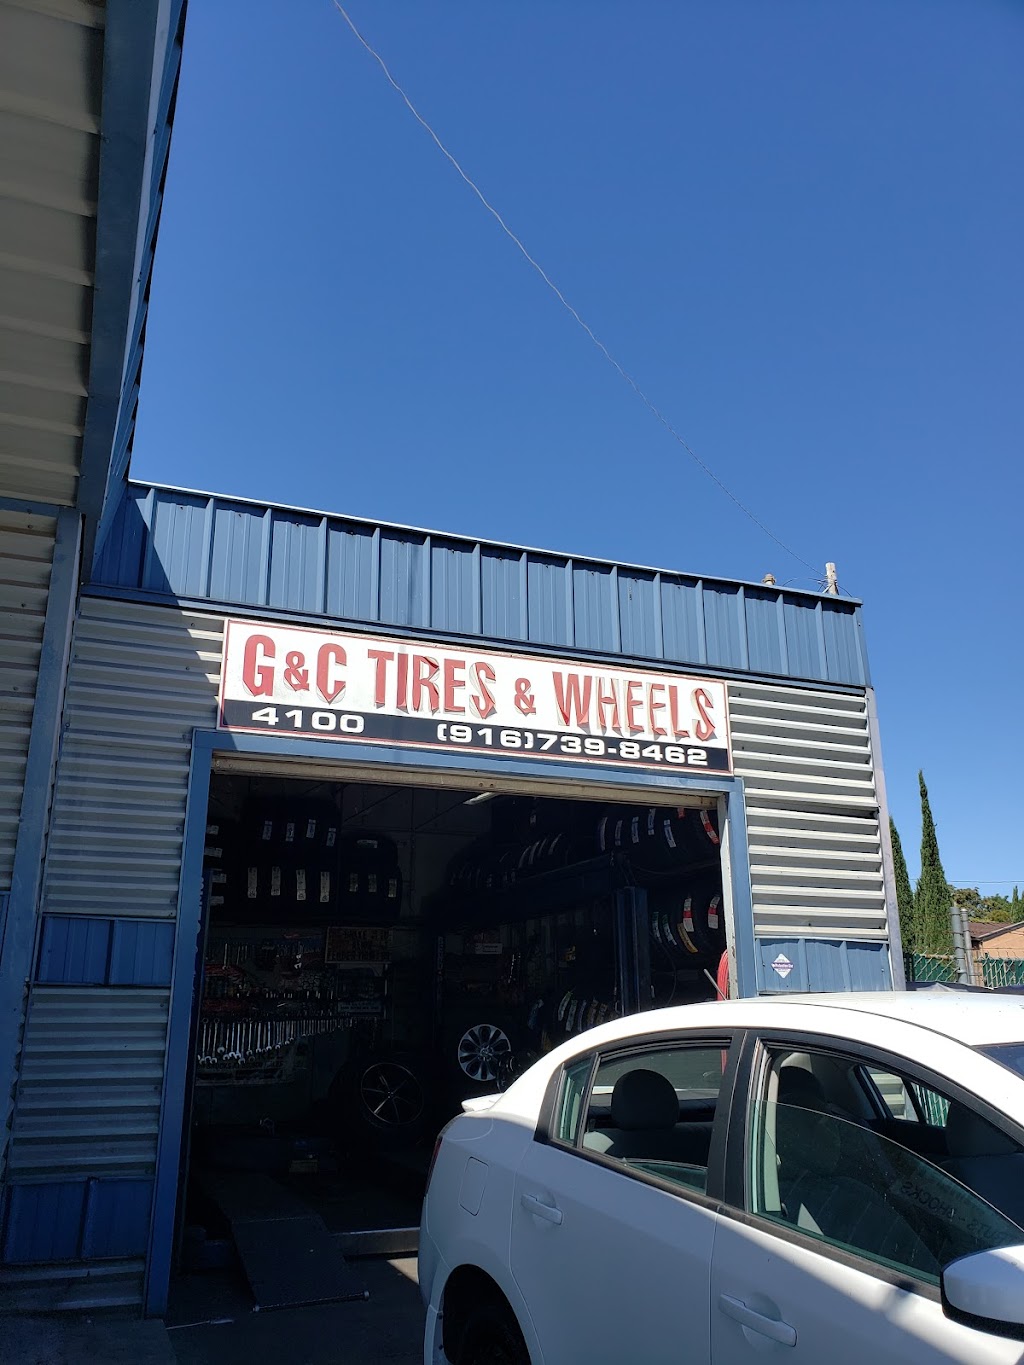 G & C Tires & Wheels | 4100 Franklin Blvd, Sacramento, CA 95820 | Phone: (916) 739-8462